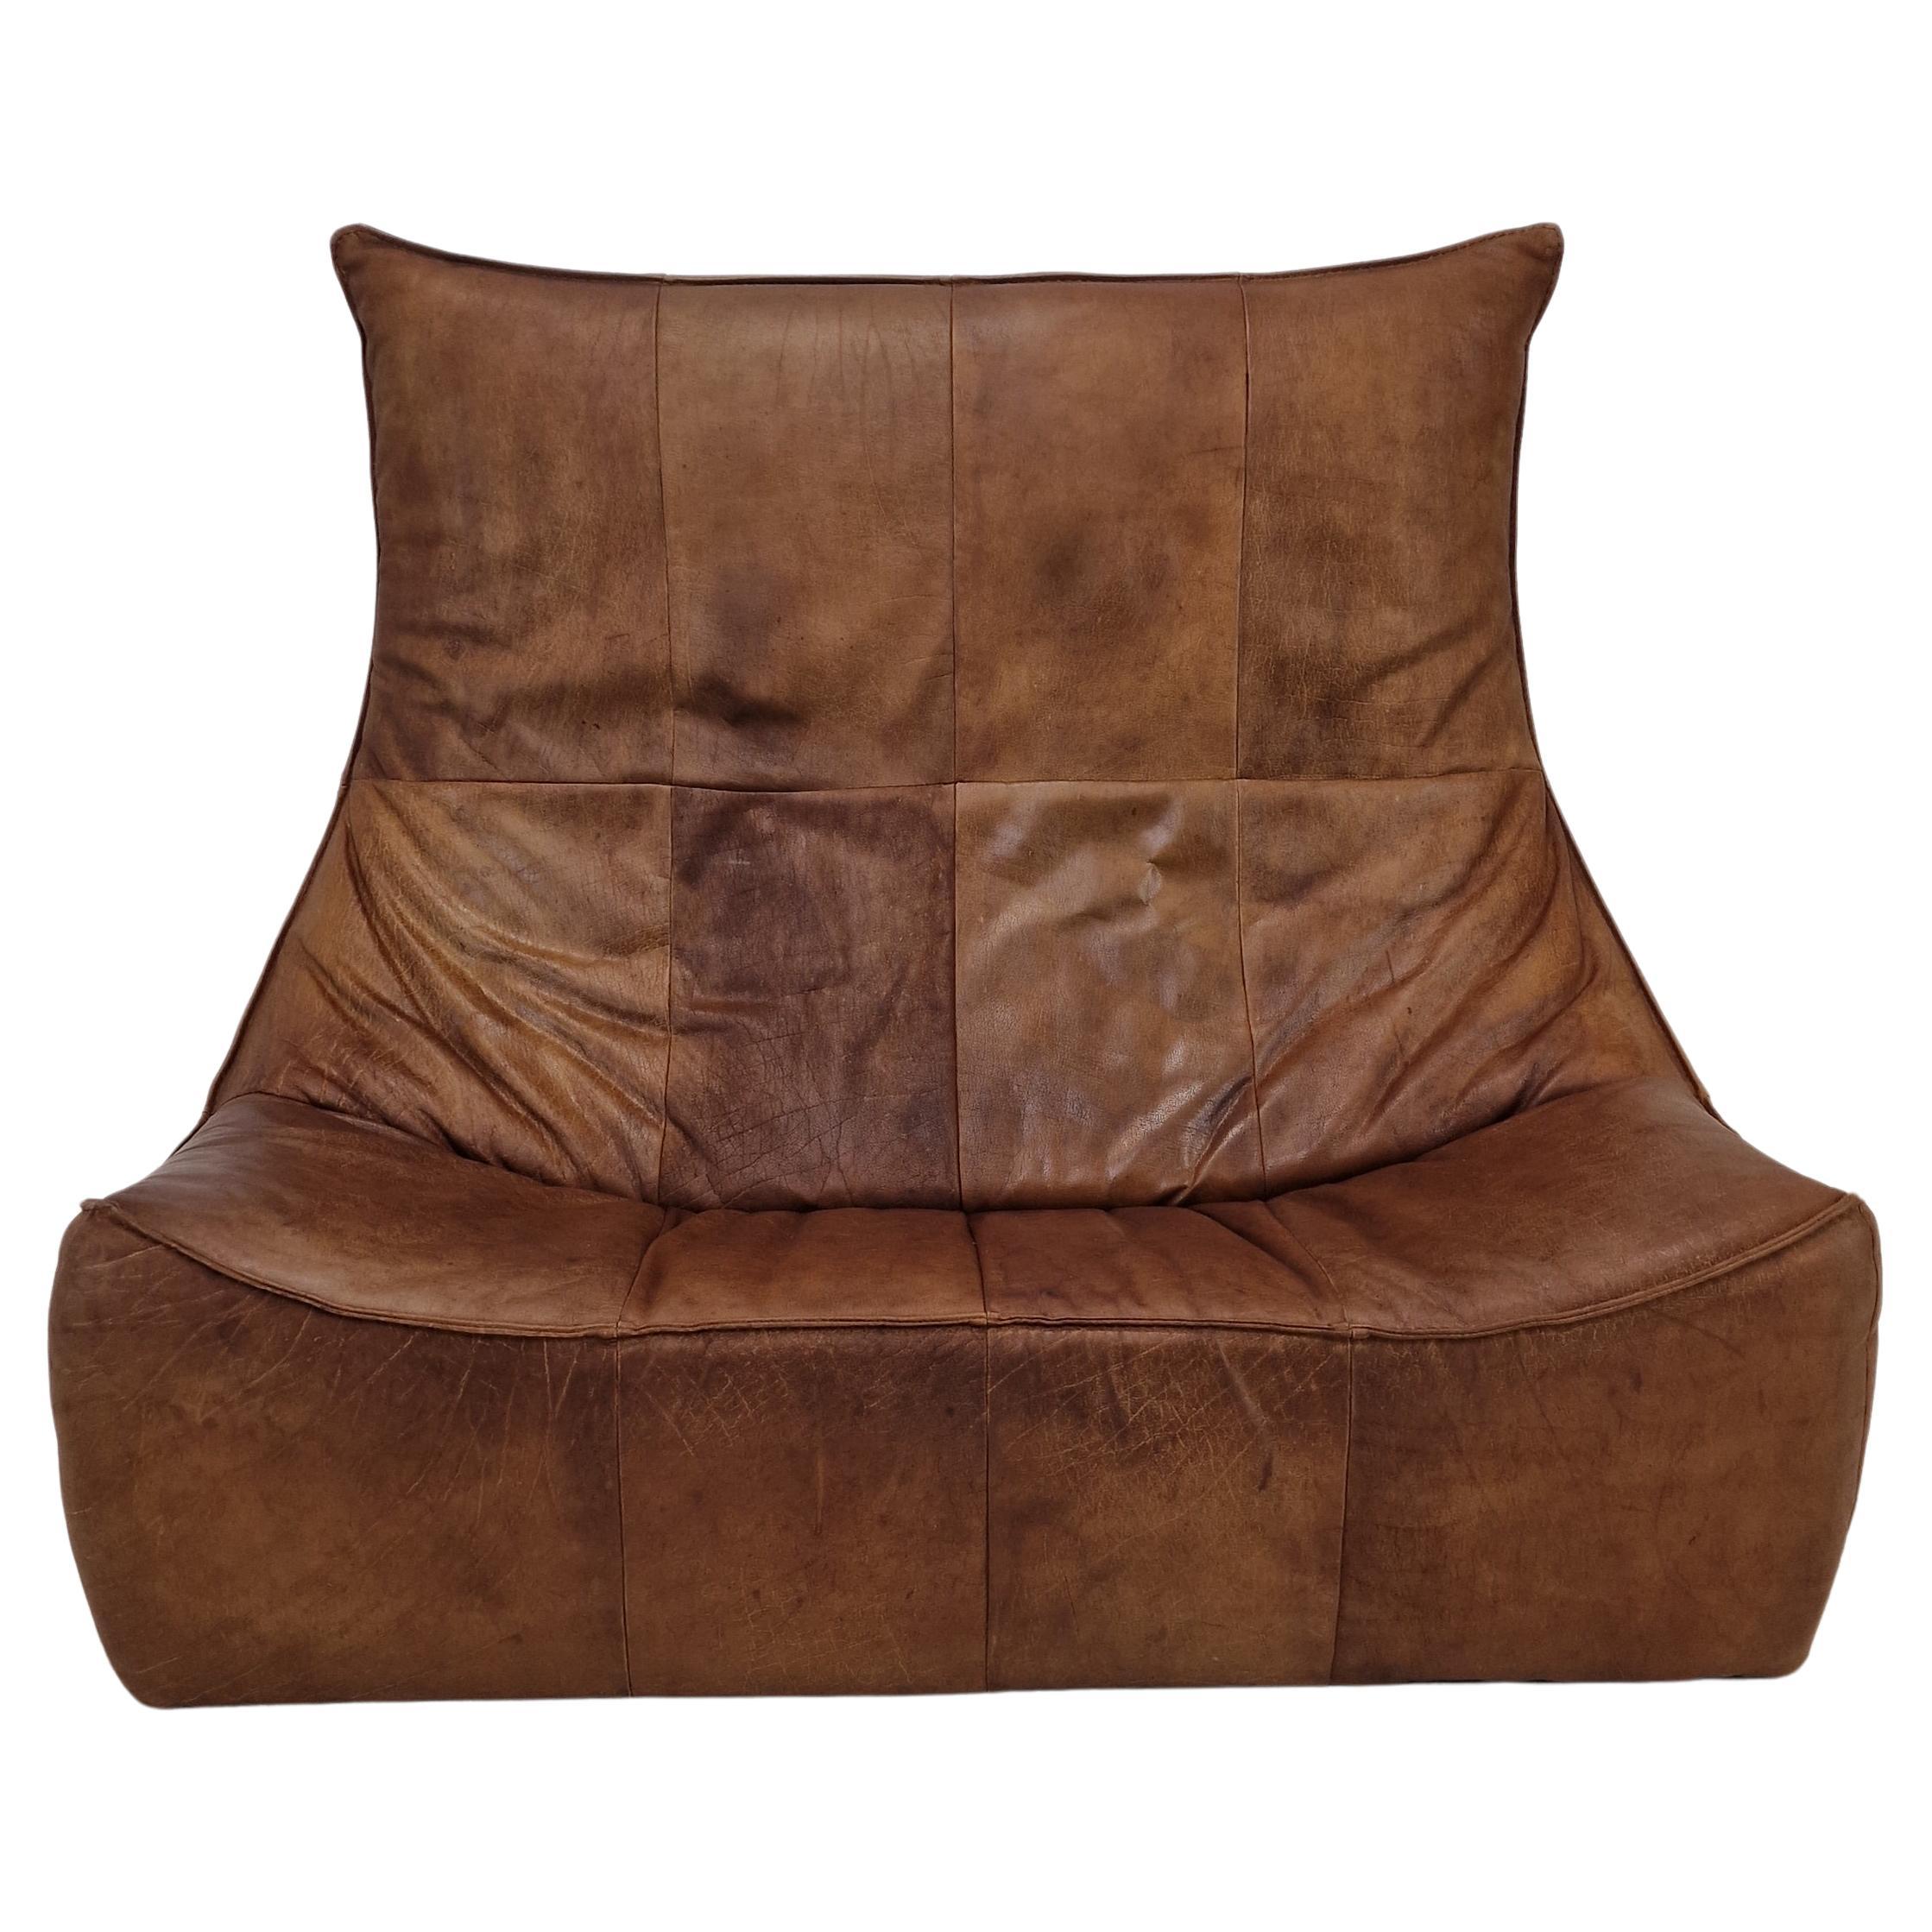 Montis “The Rock” Sofa In Brown Leather By Gerard Van Den Berg, 1970s